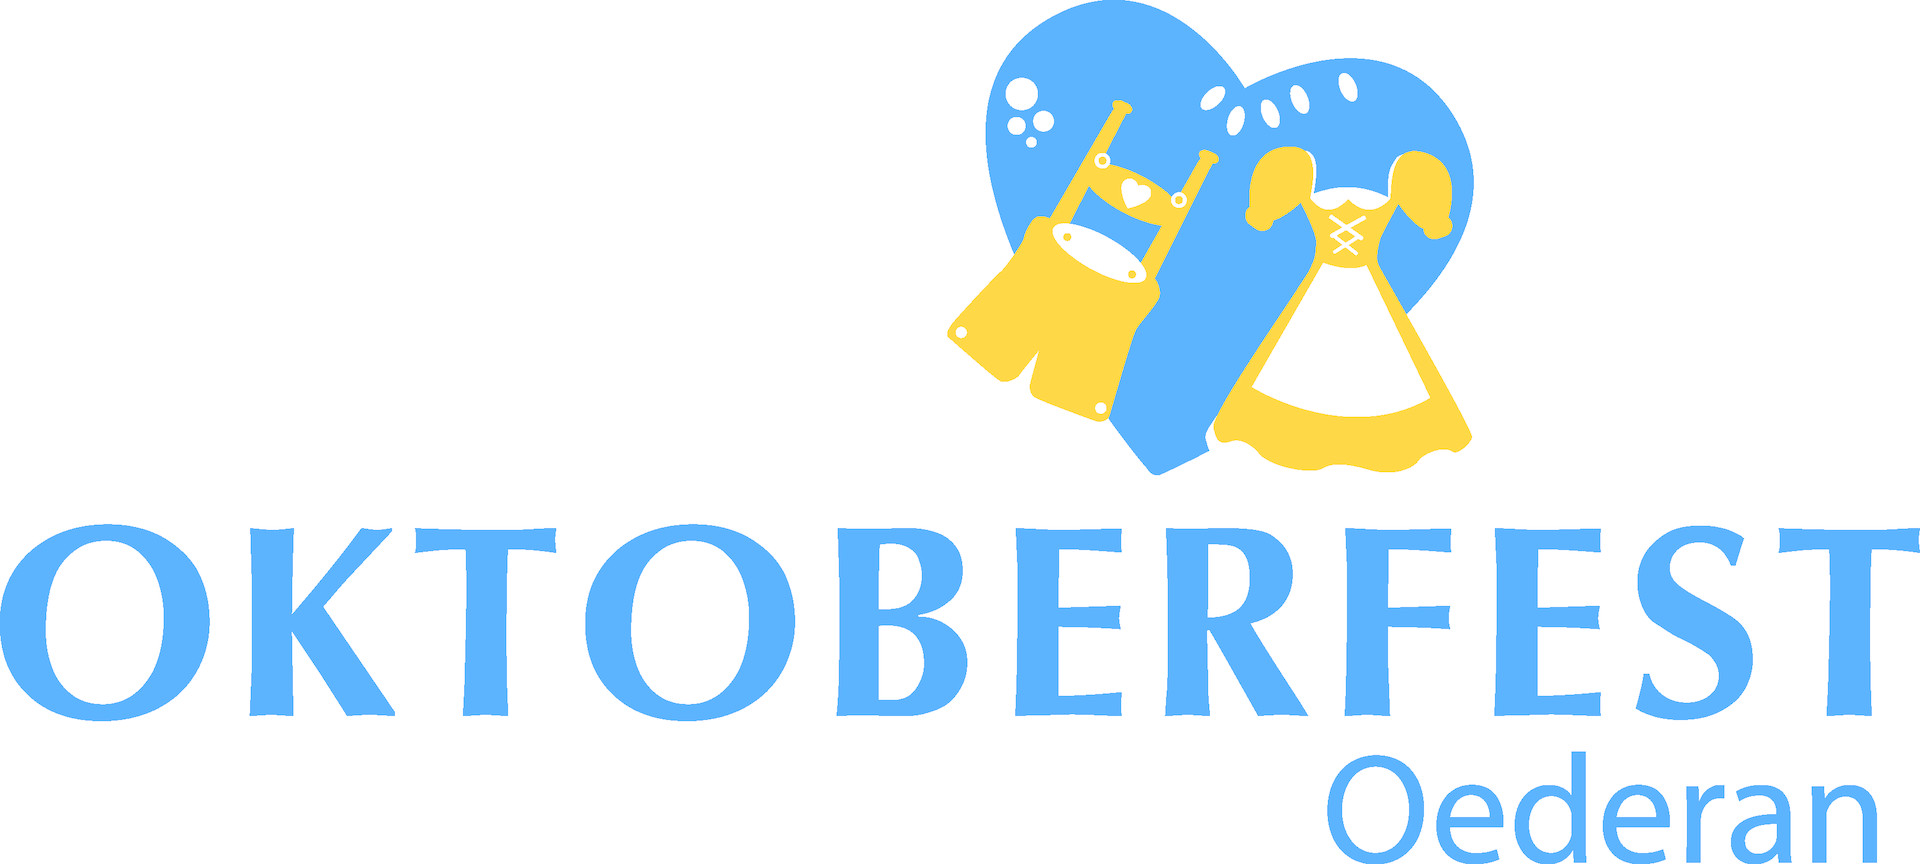 Logo - Oktoberfest Oederan